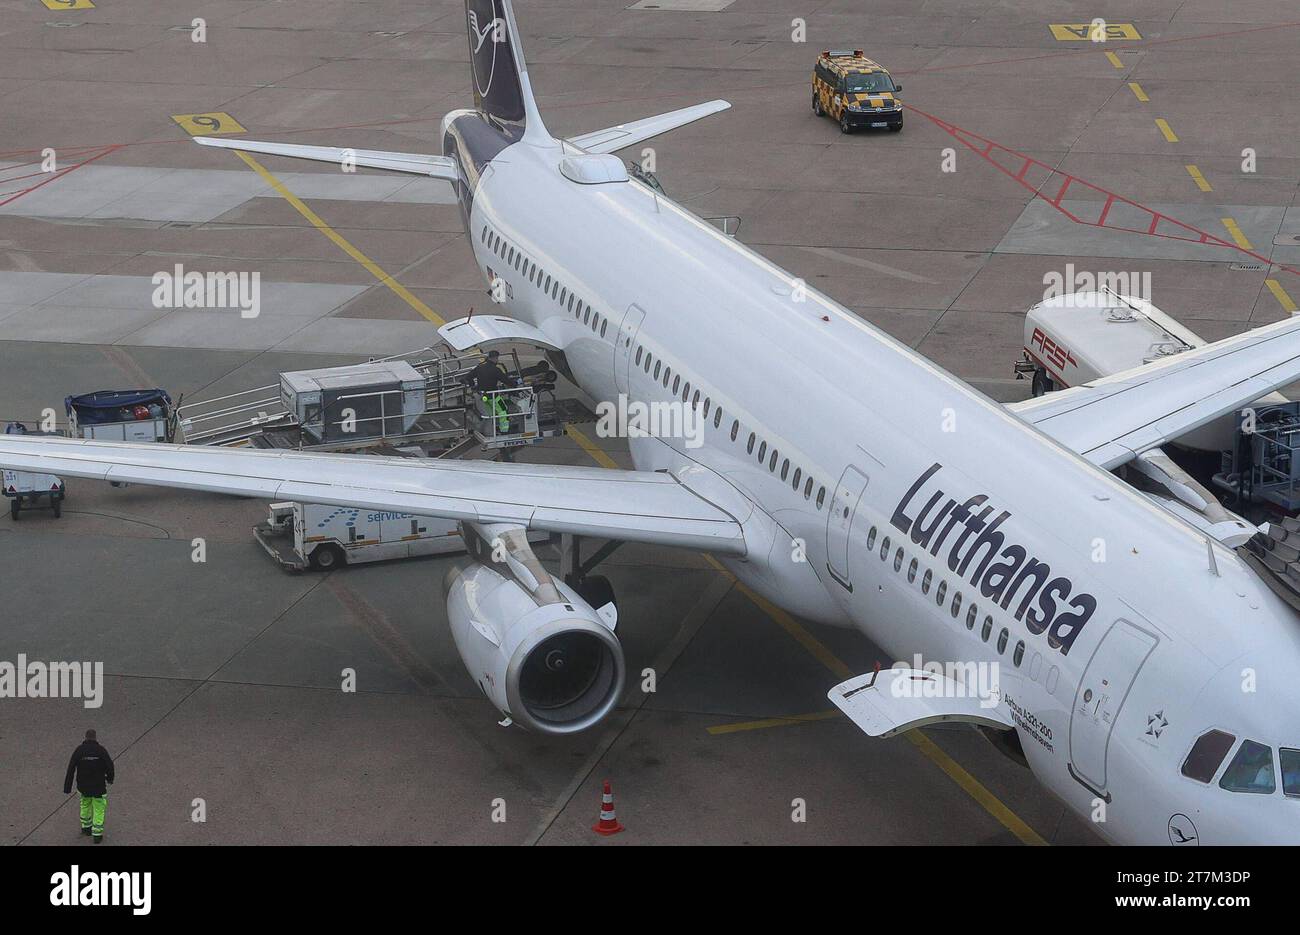 Hannover, Flughafen, Vorfeld, Lufthansa Airbus A321-200, wird mit Gepäck beladen, *** Hanover, airport, apron, Lufthansa Airbus A321 200, being loaded with baggage, Stock Photo